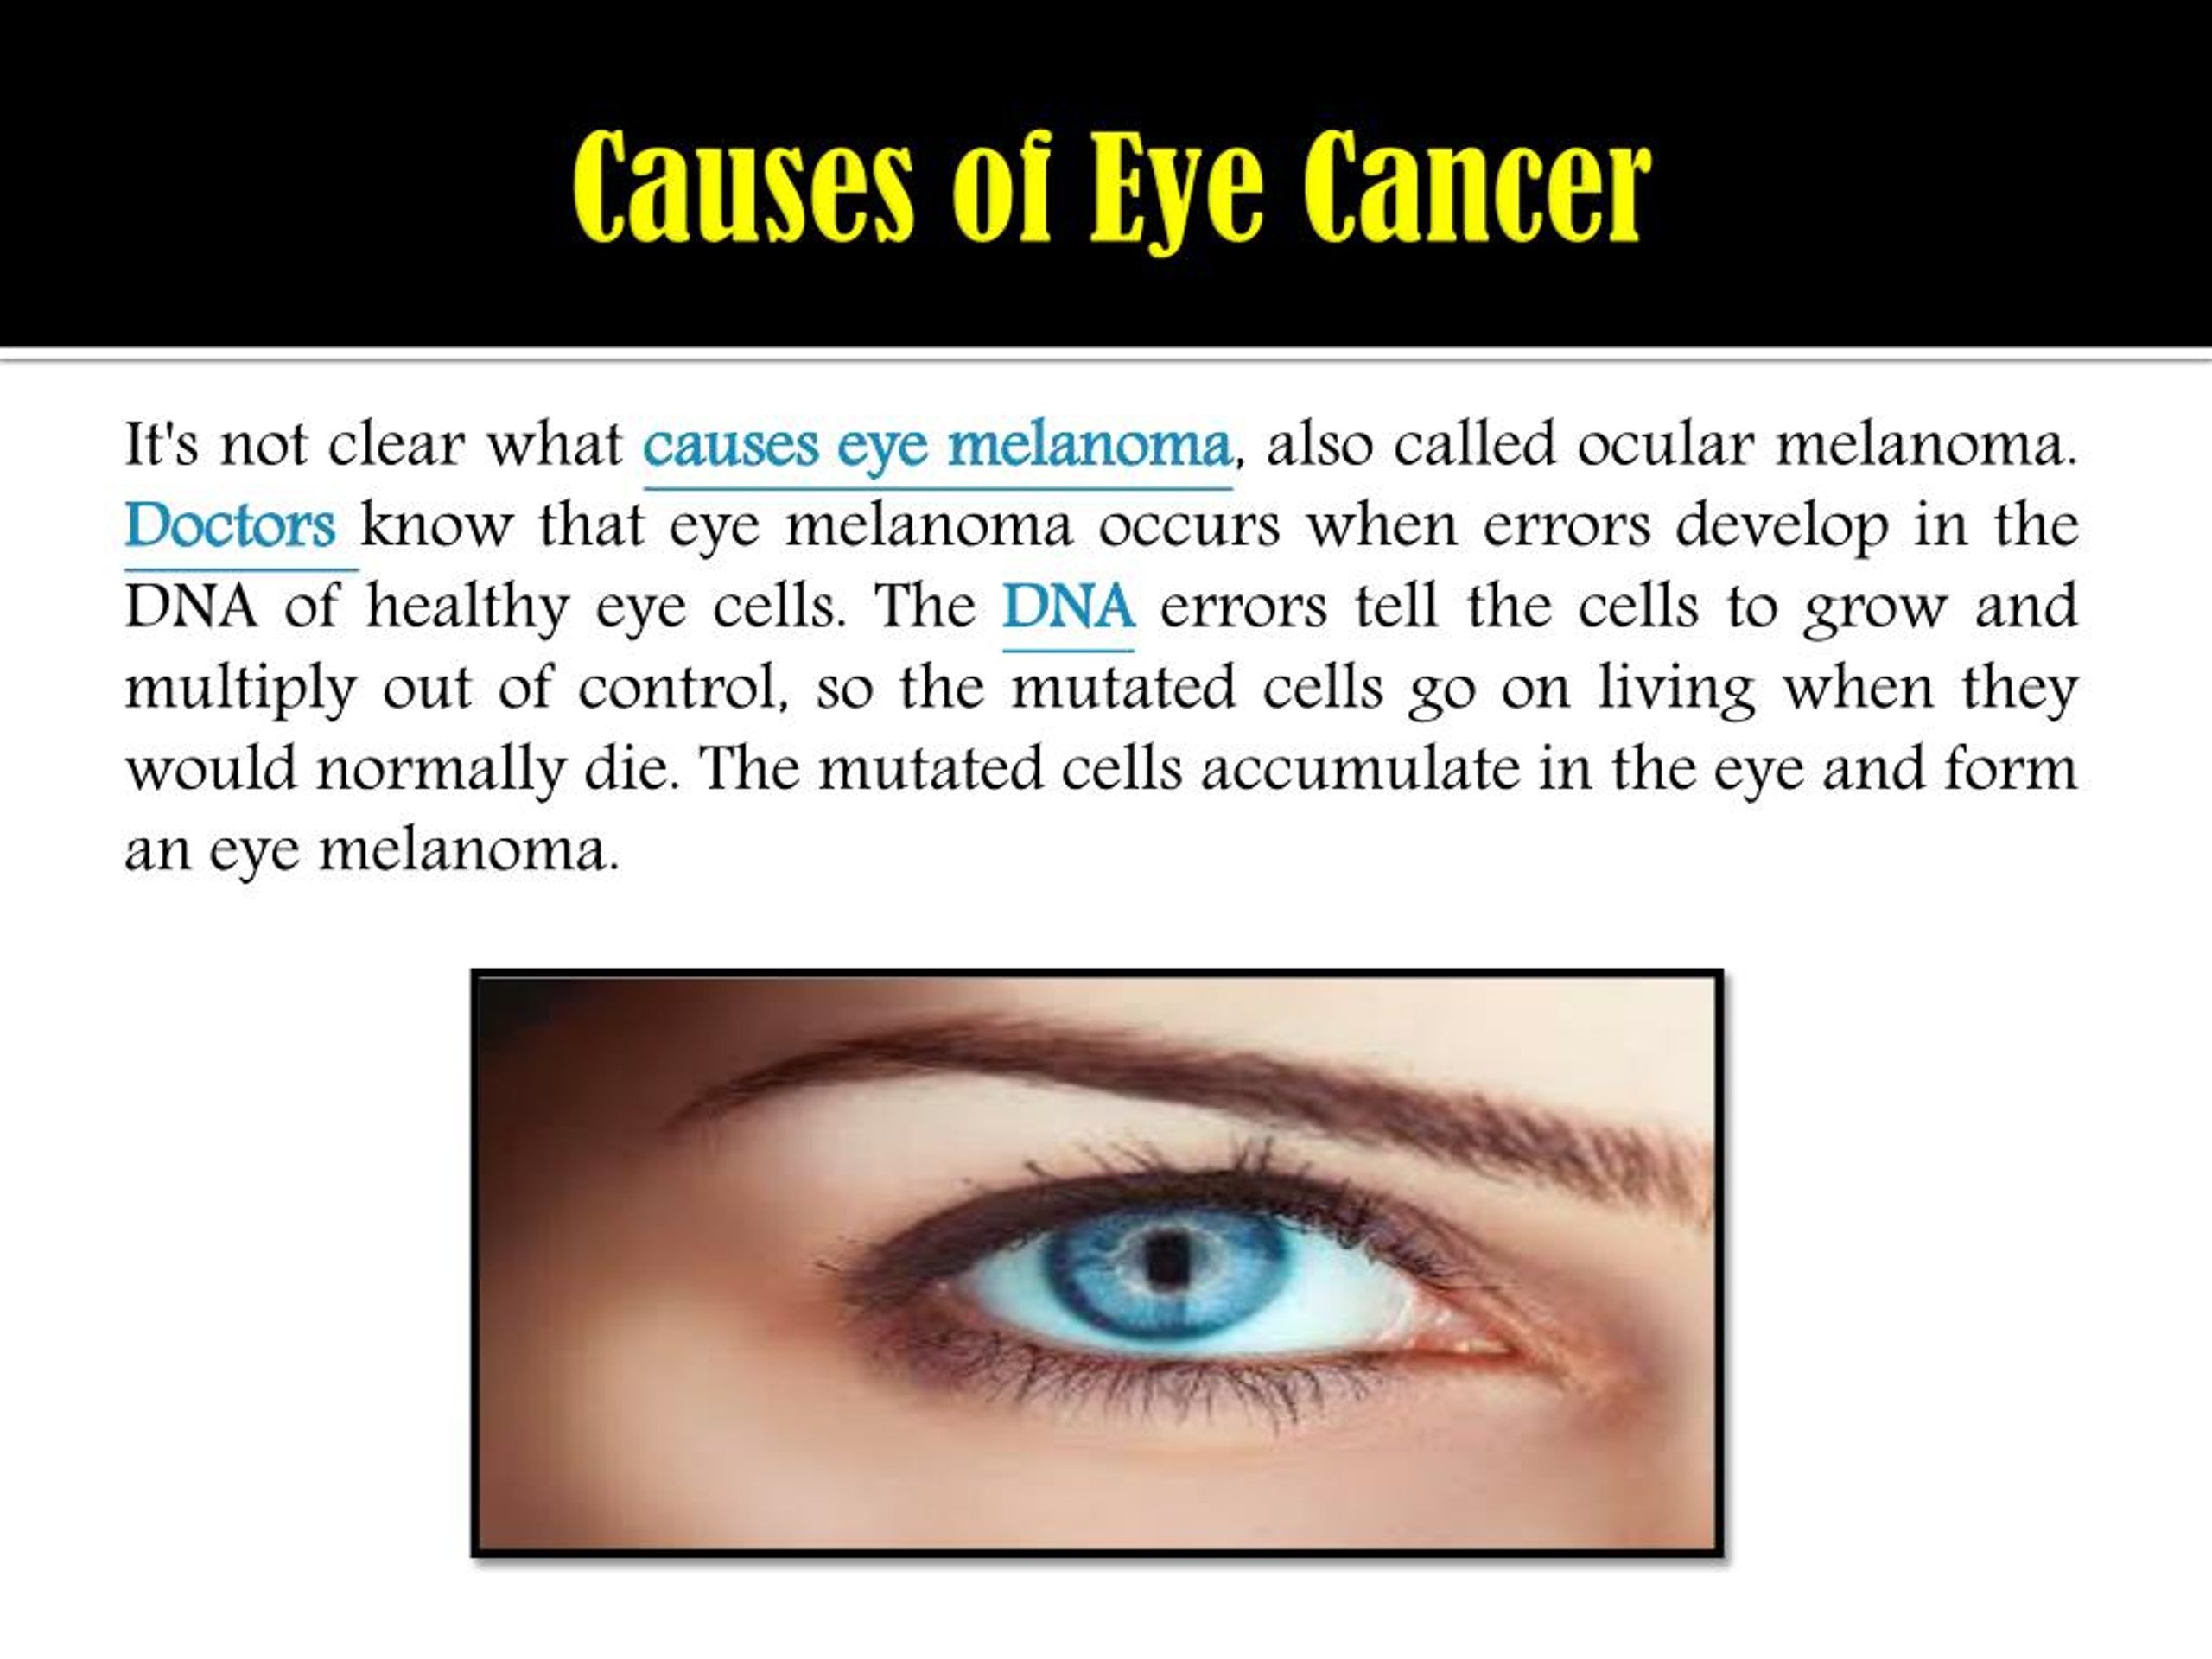 Ppt Eye Cancer Eye Melanoma Symptoms Causes Diagnosis And